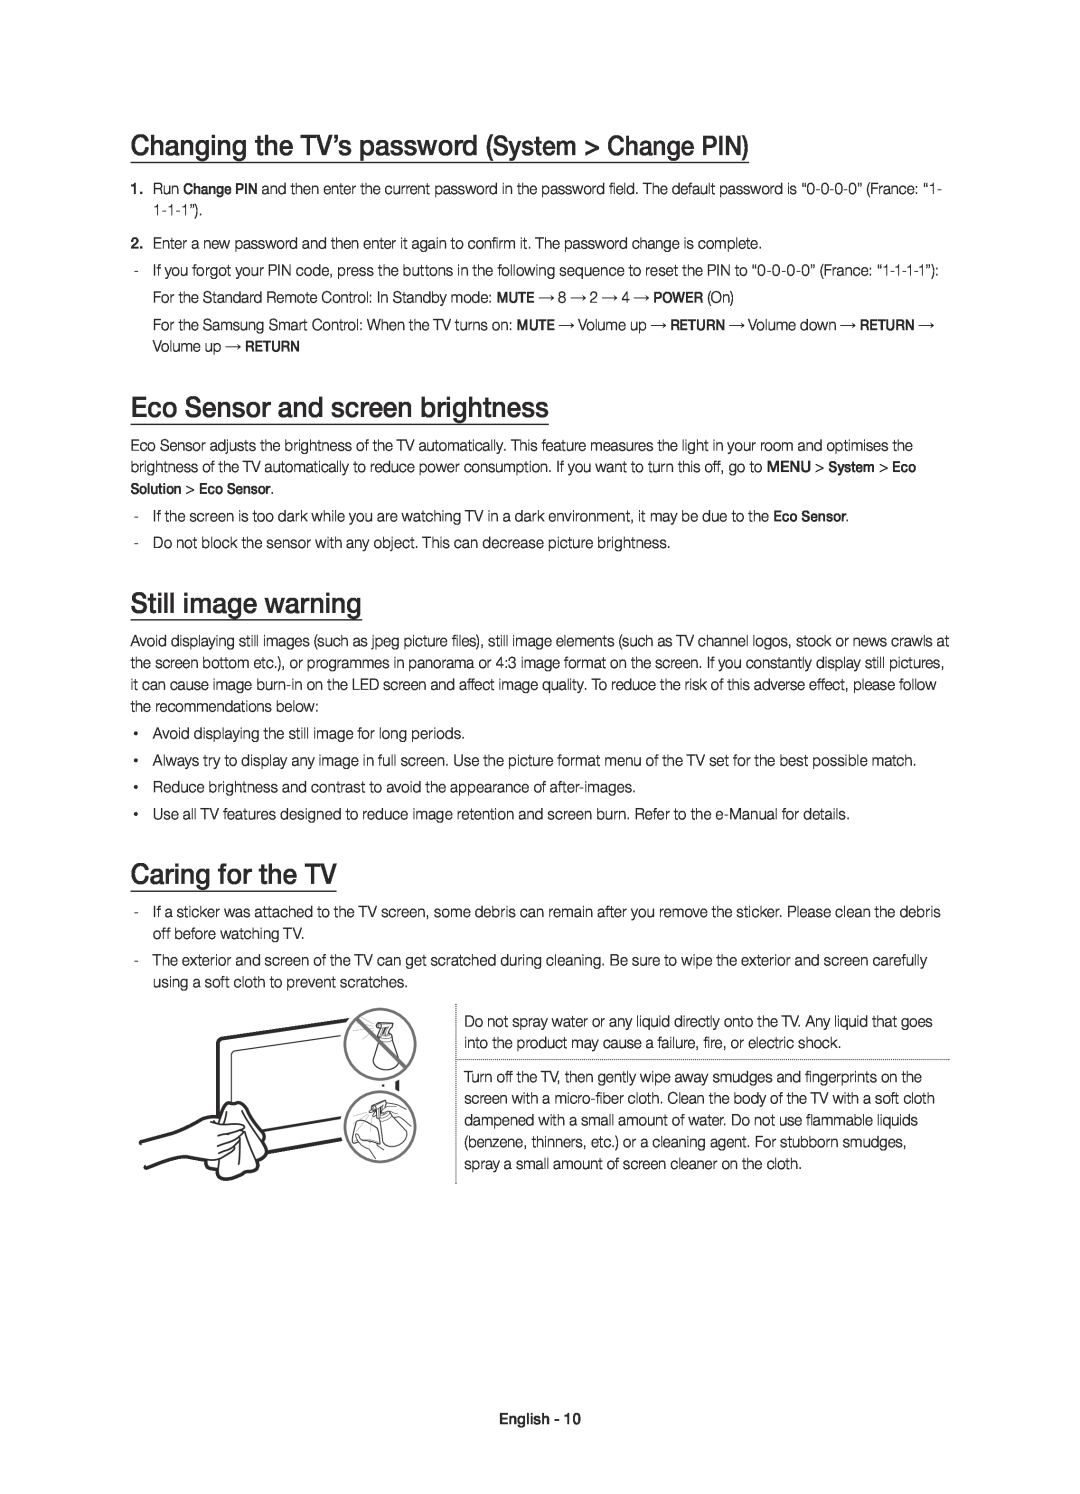 Samsung UE55JU6650SXXH Changing the TV’s password System Change PIN, Eco Sensor and screen brightness, Still image warning 